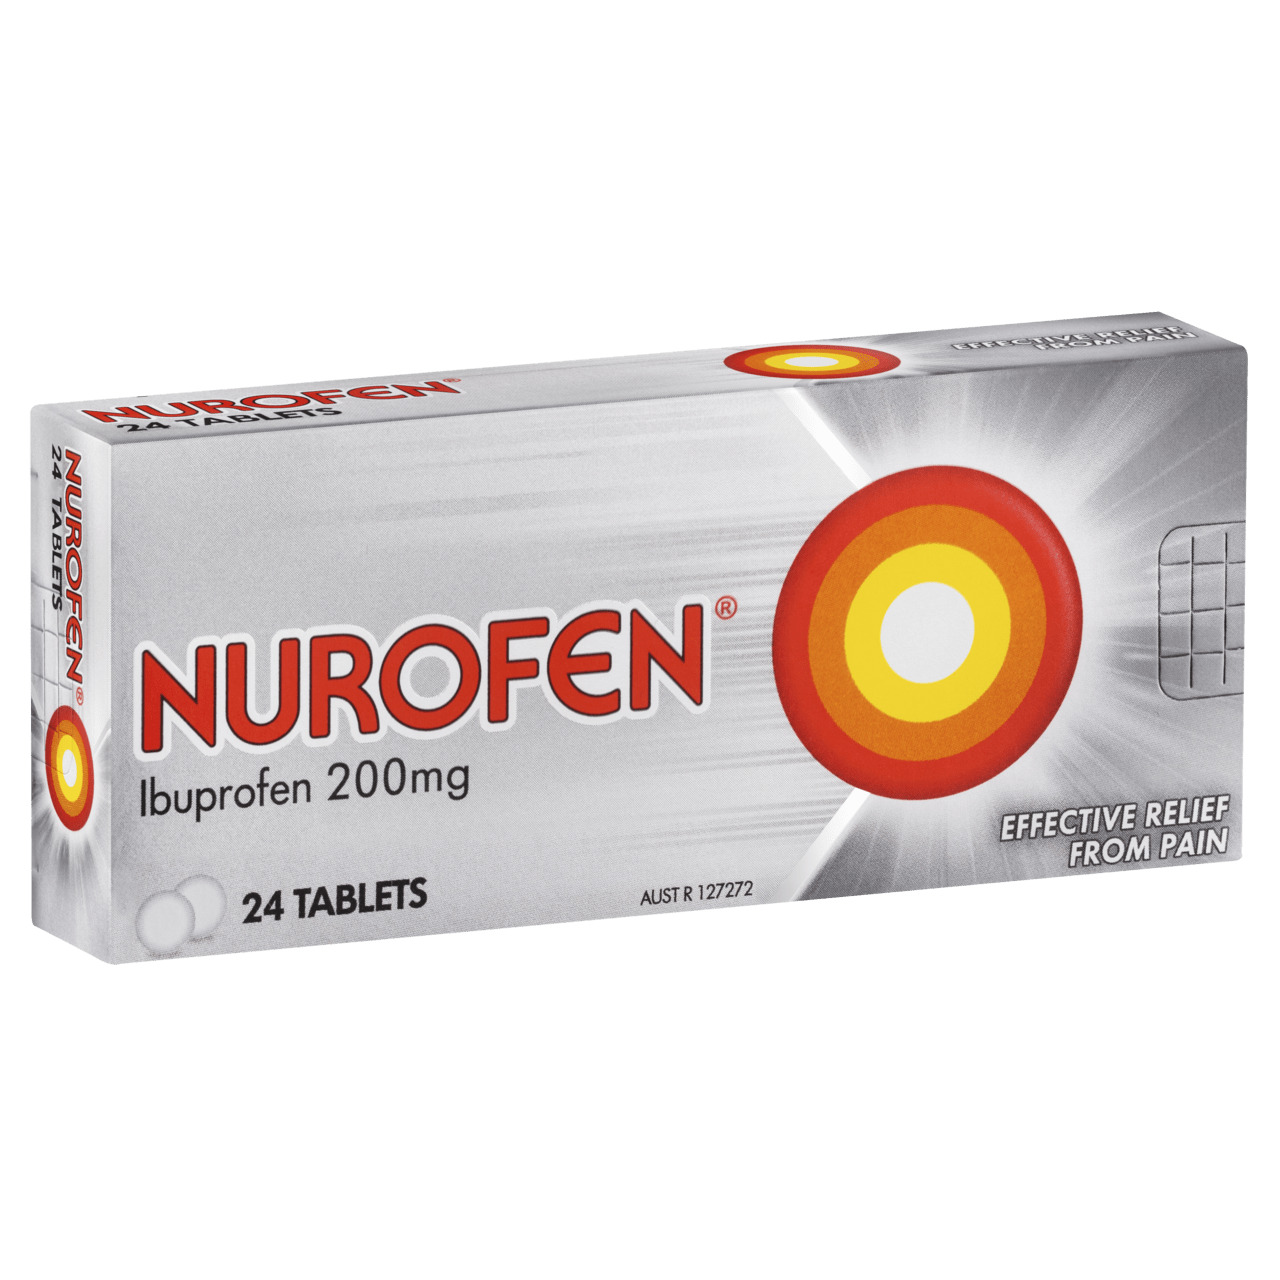 Nurofen Ibuprofen 200mg icons